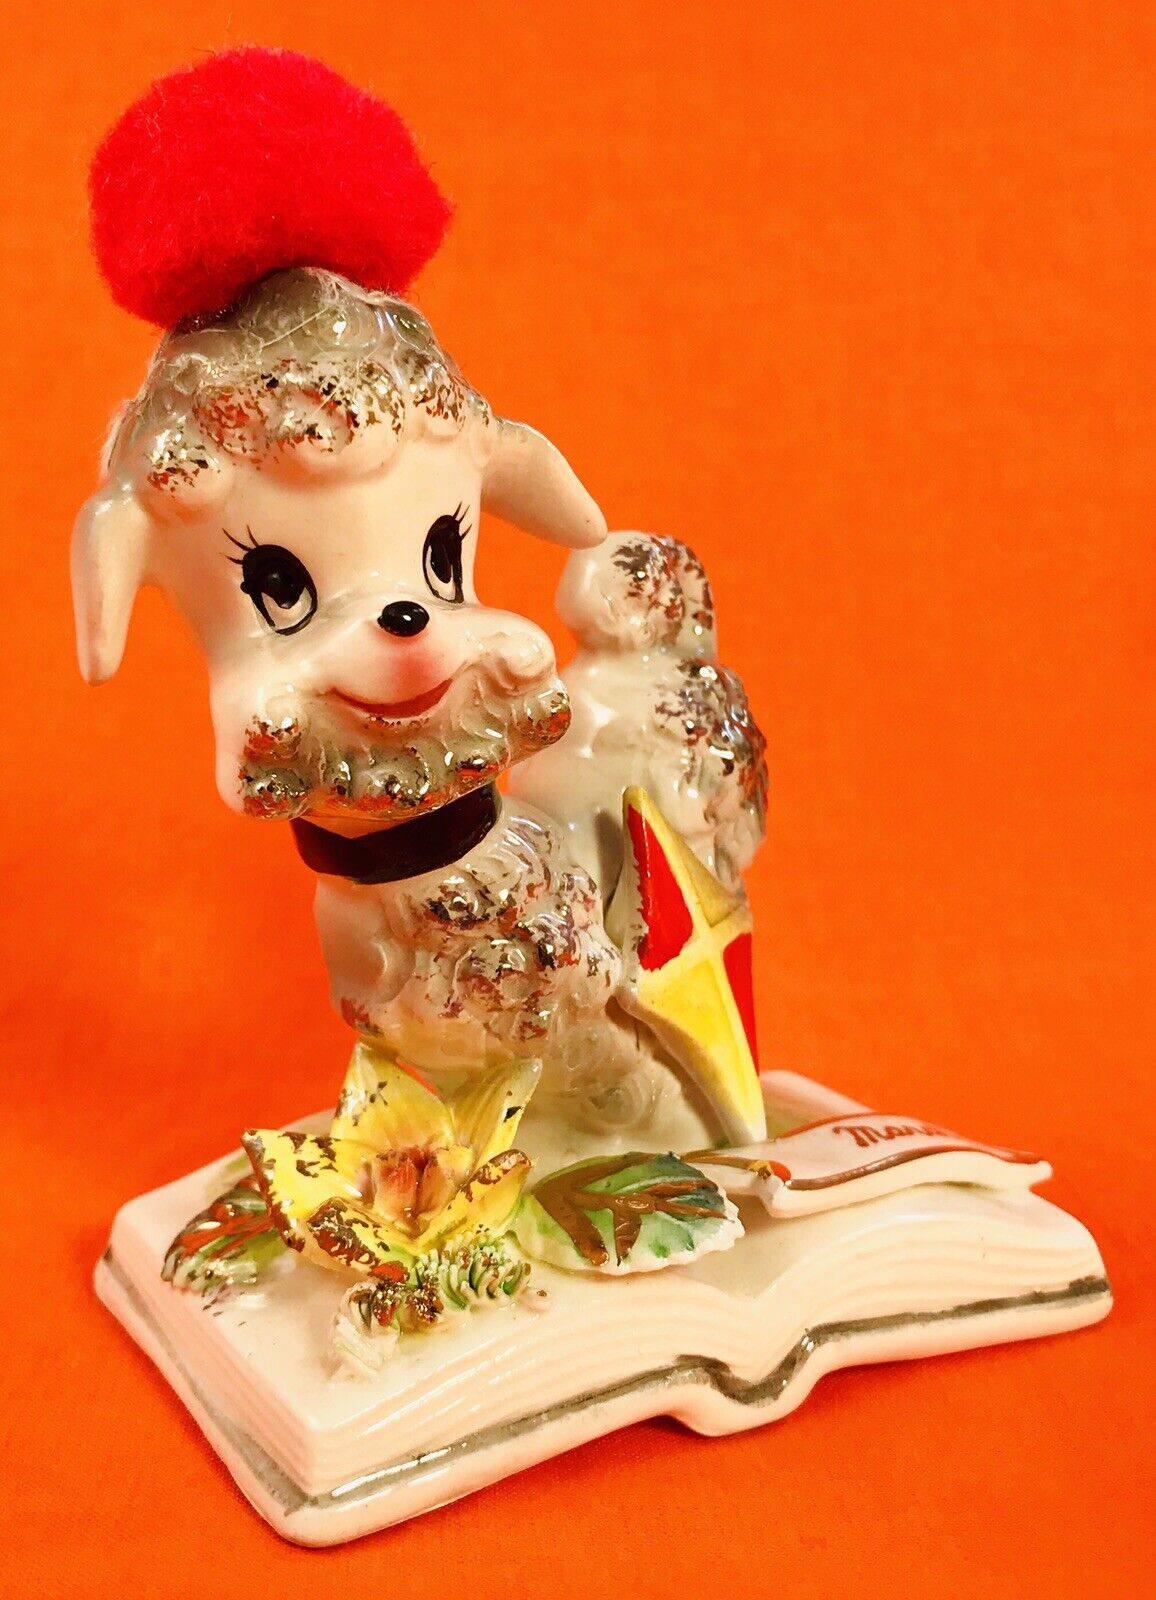 🐶 CUTE VTG Poodle Dog Kite March Birthday Norcrest Figurine 1950s Retro Kitsch